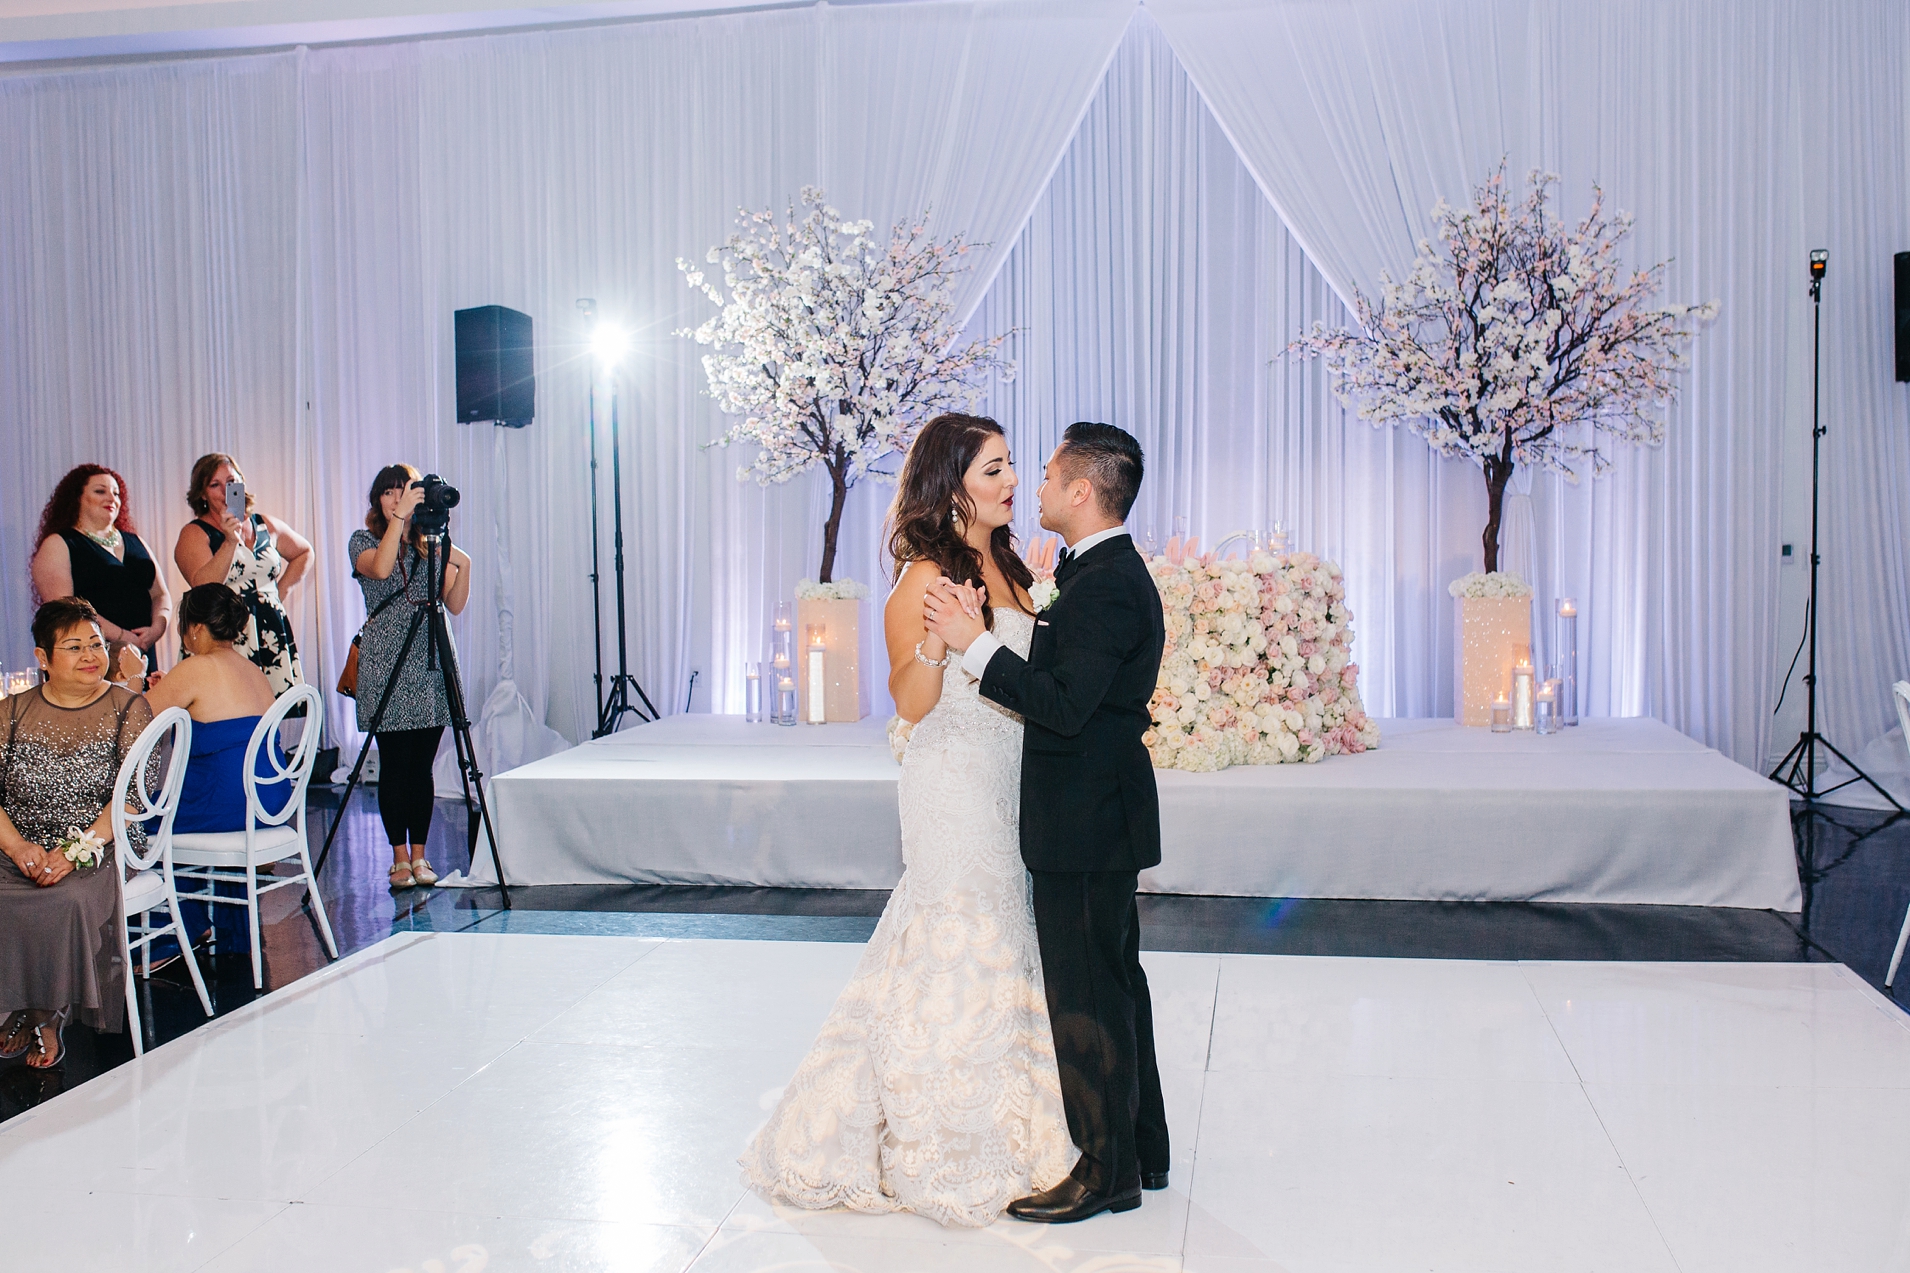 Wedding Reception by Brittney Hannon Photography at Venue by Three Petals Wedding in Huntington Beach, CA 